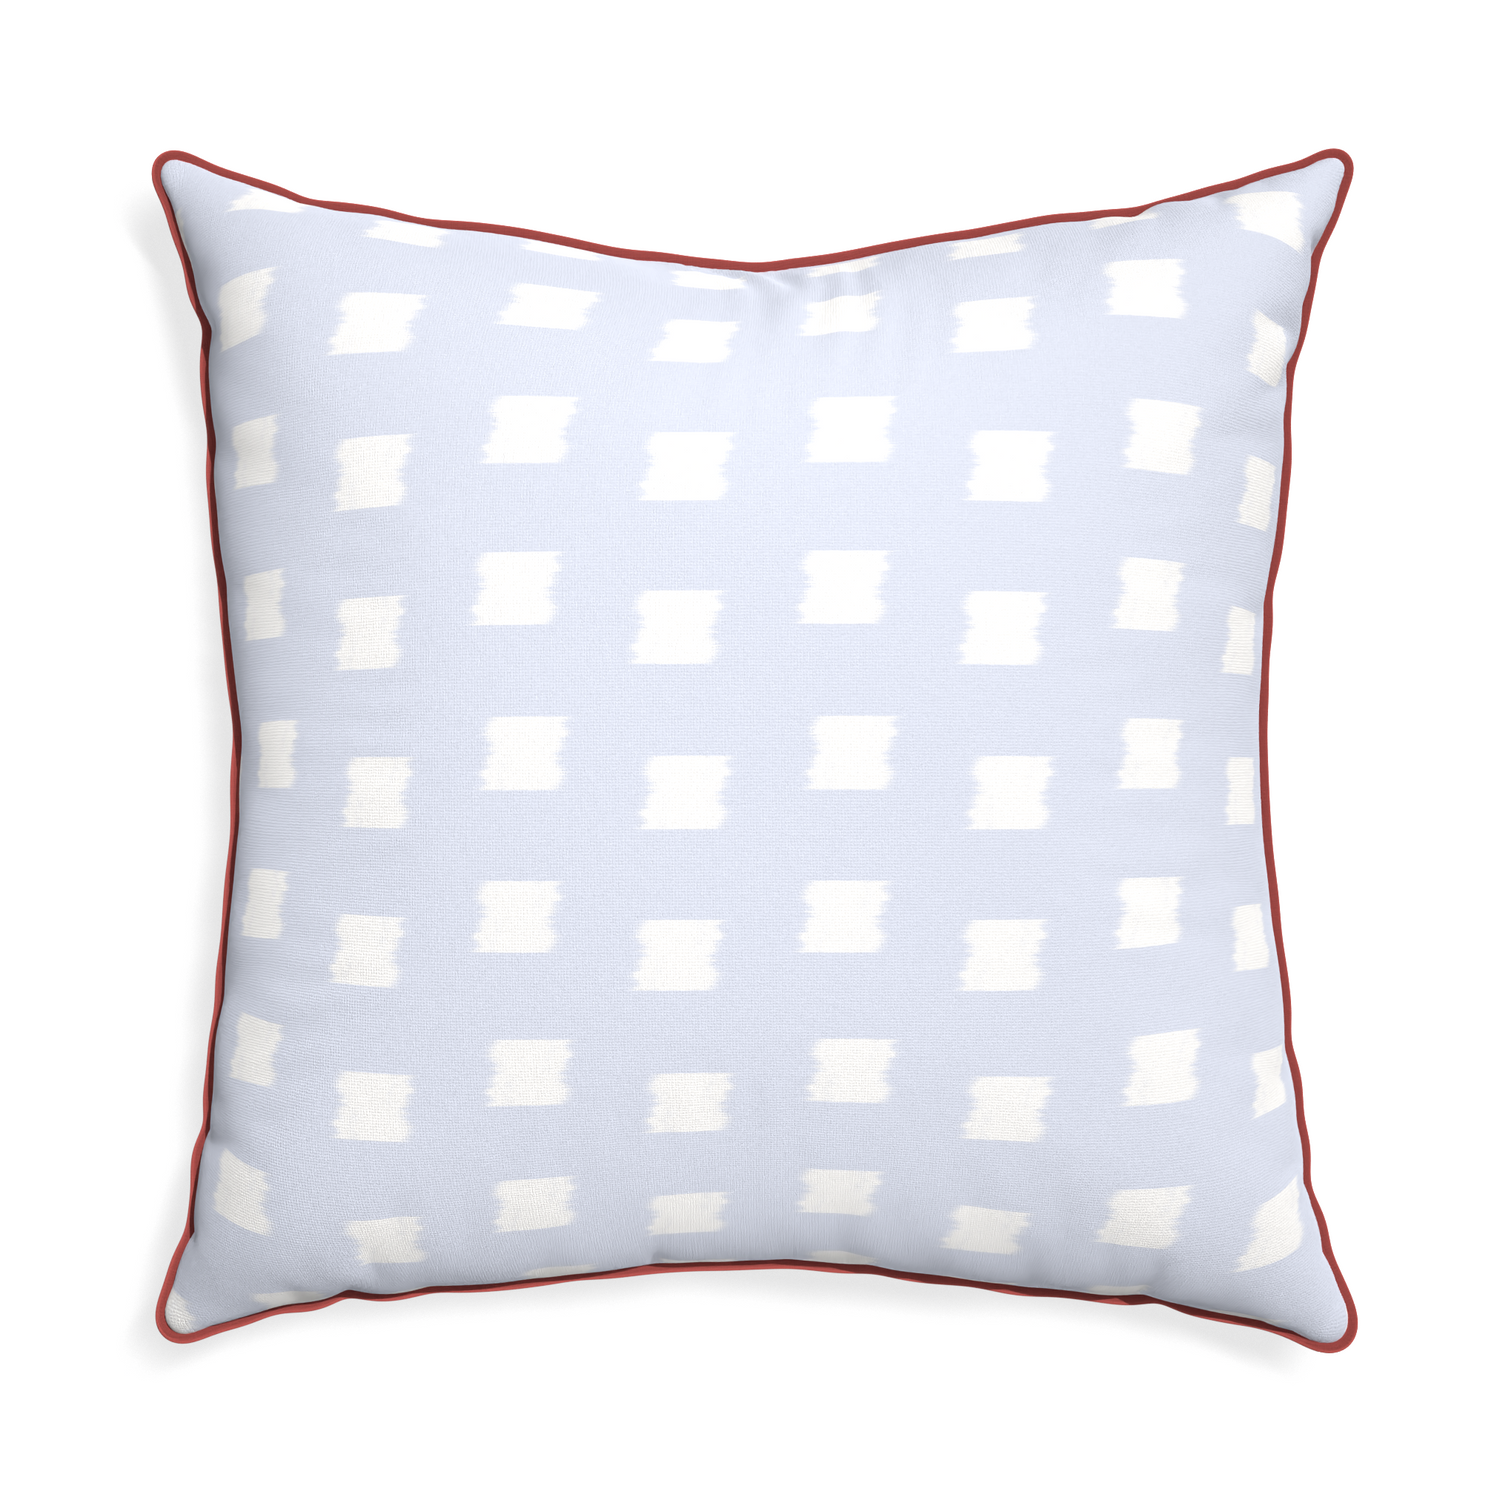 Euro-sham denton custom pillow with c piping on white background